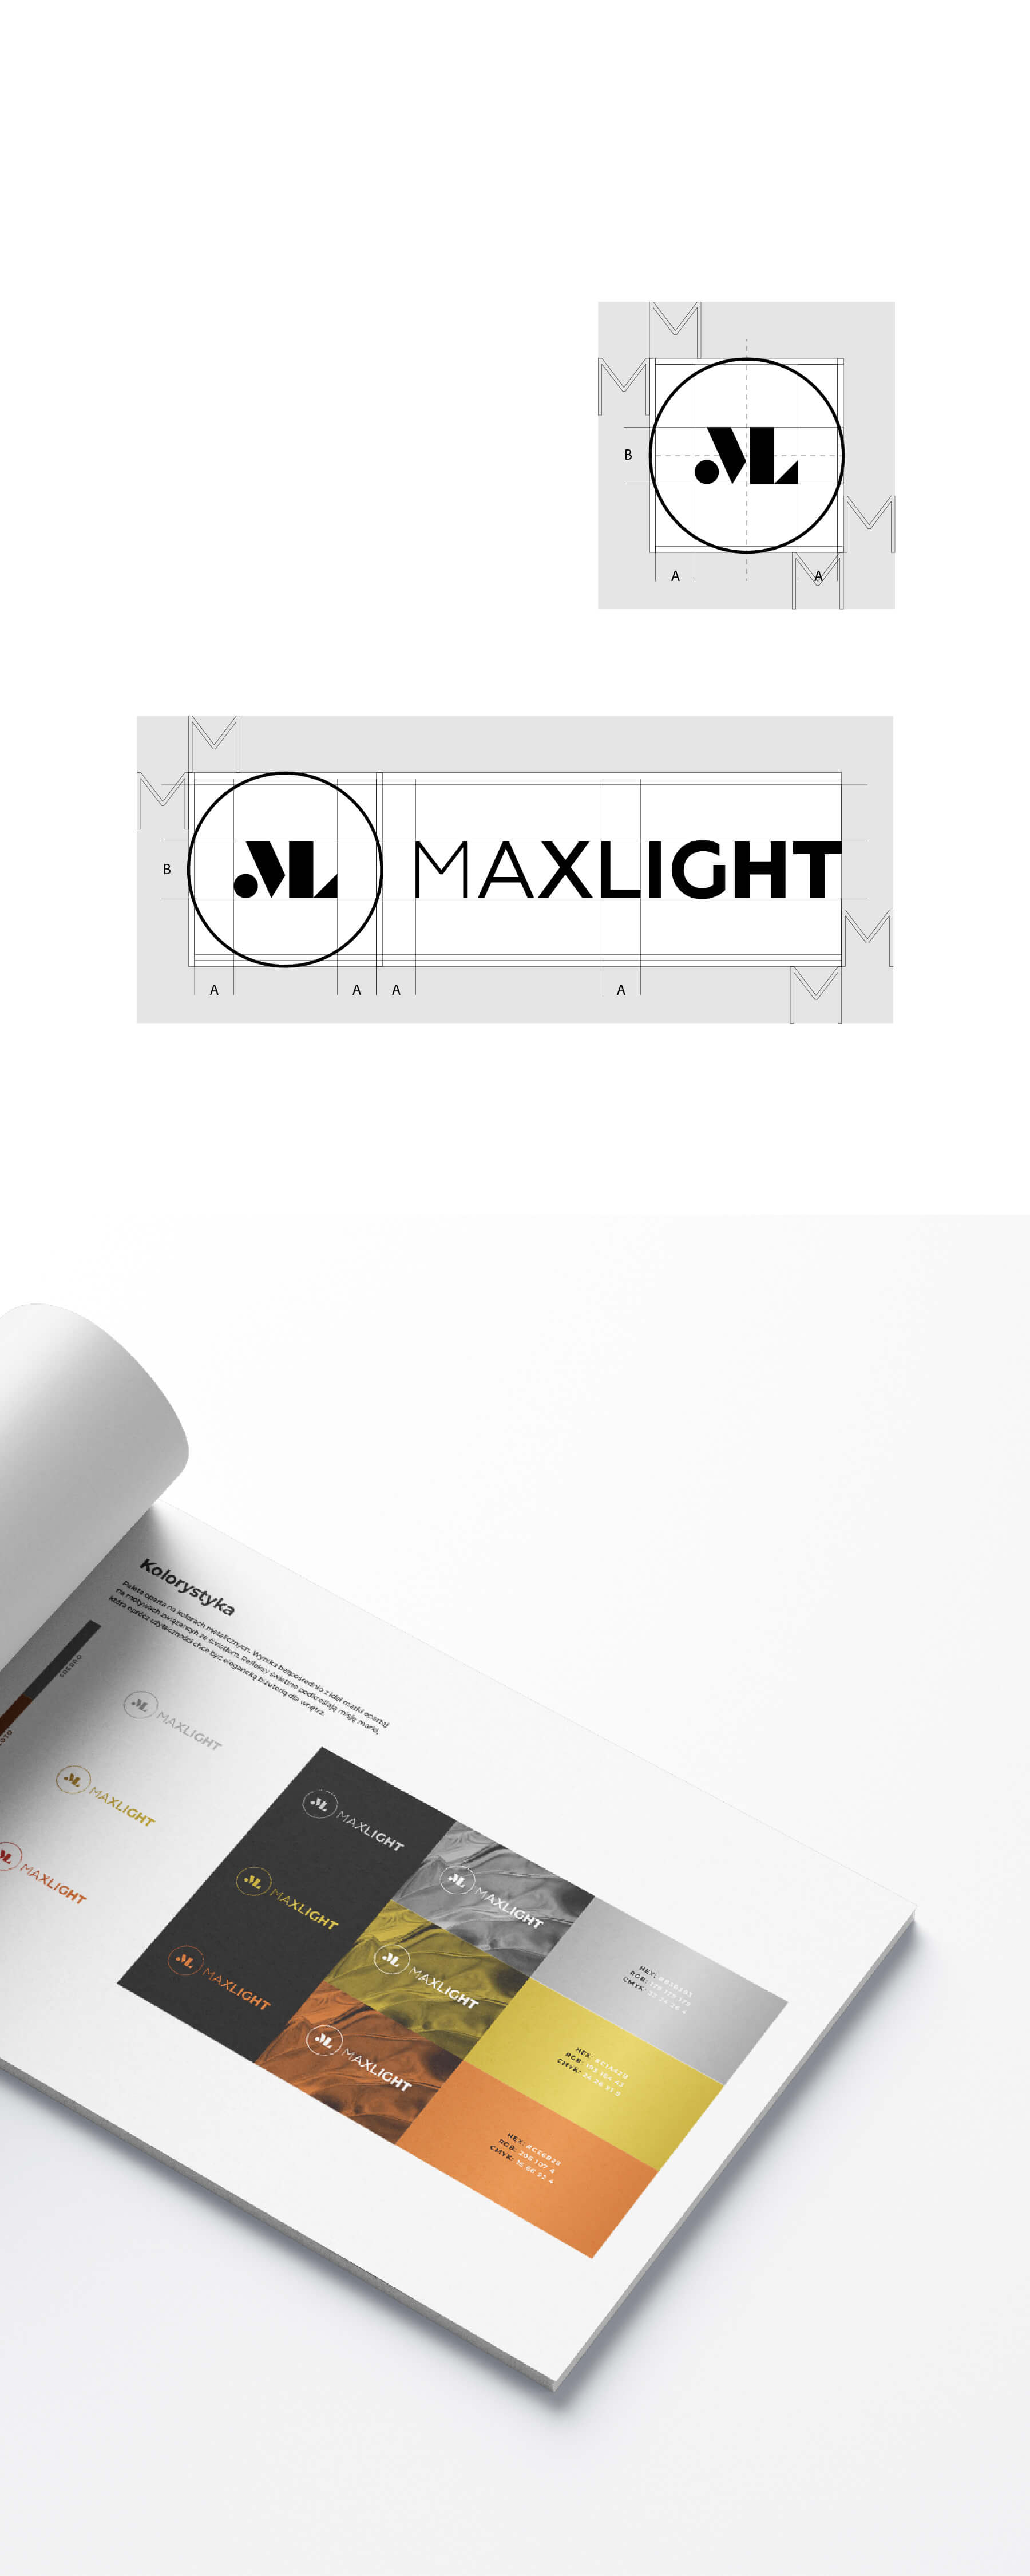 maxlight logo info